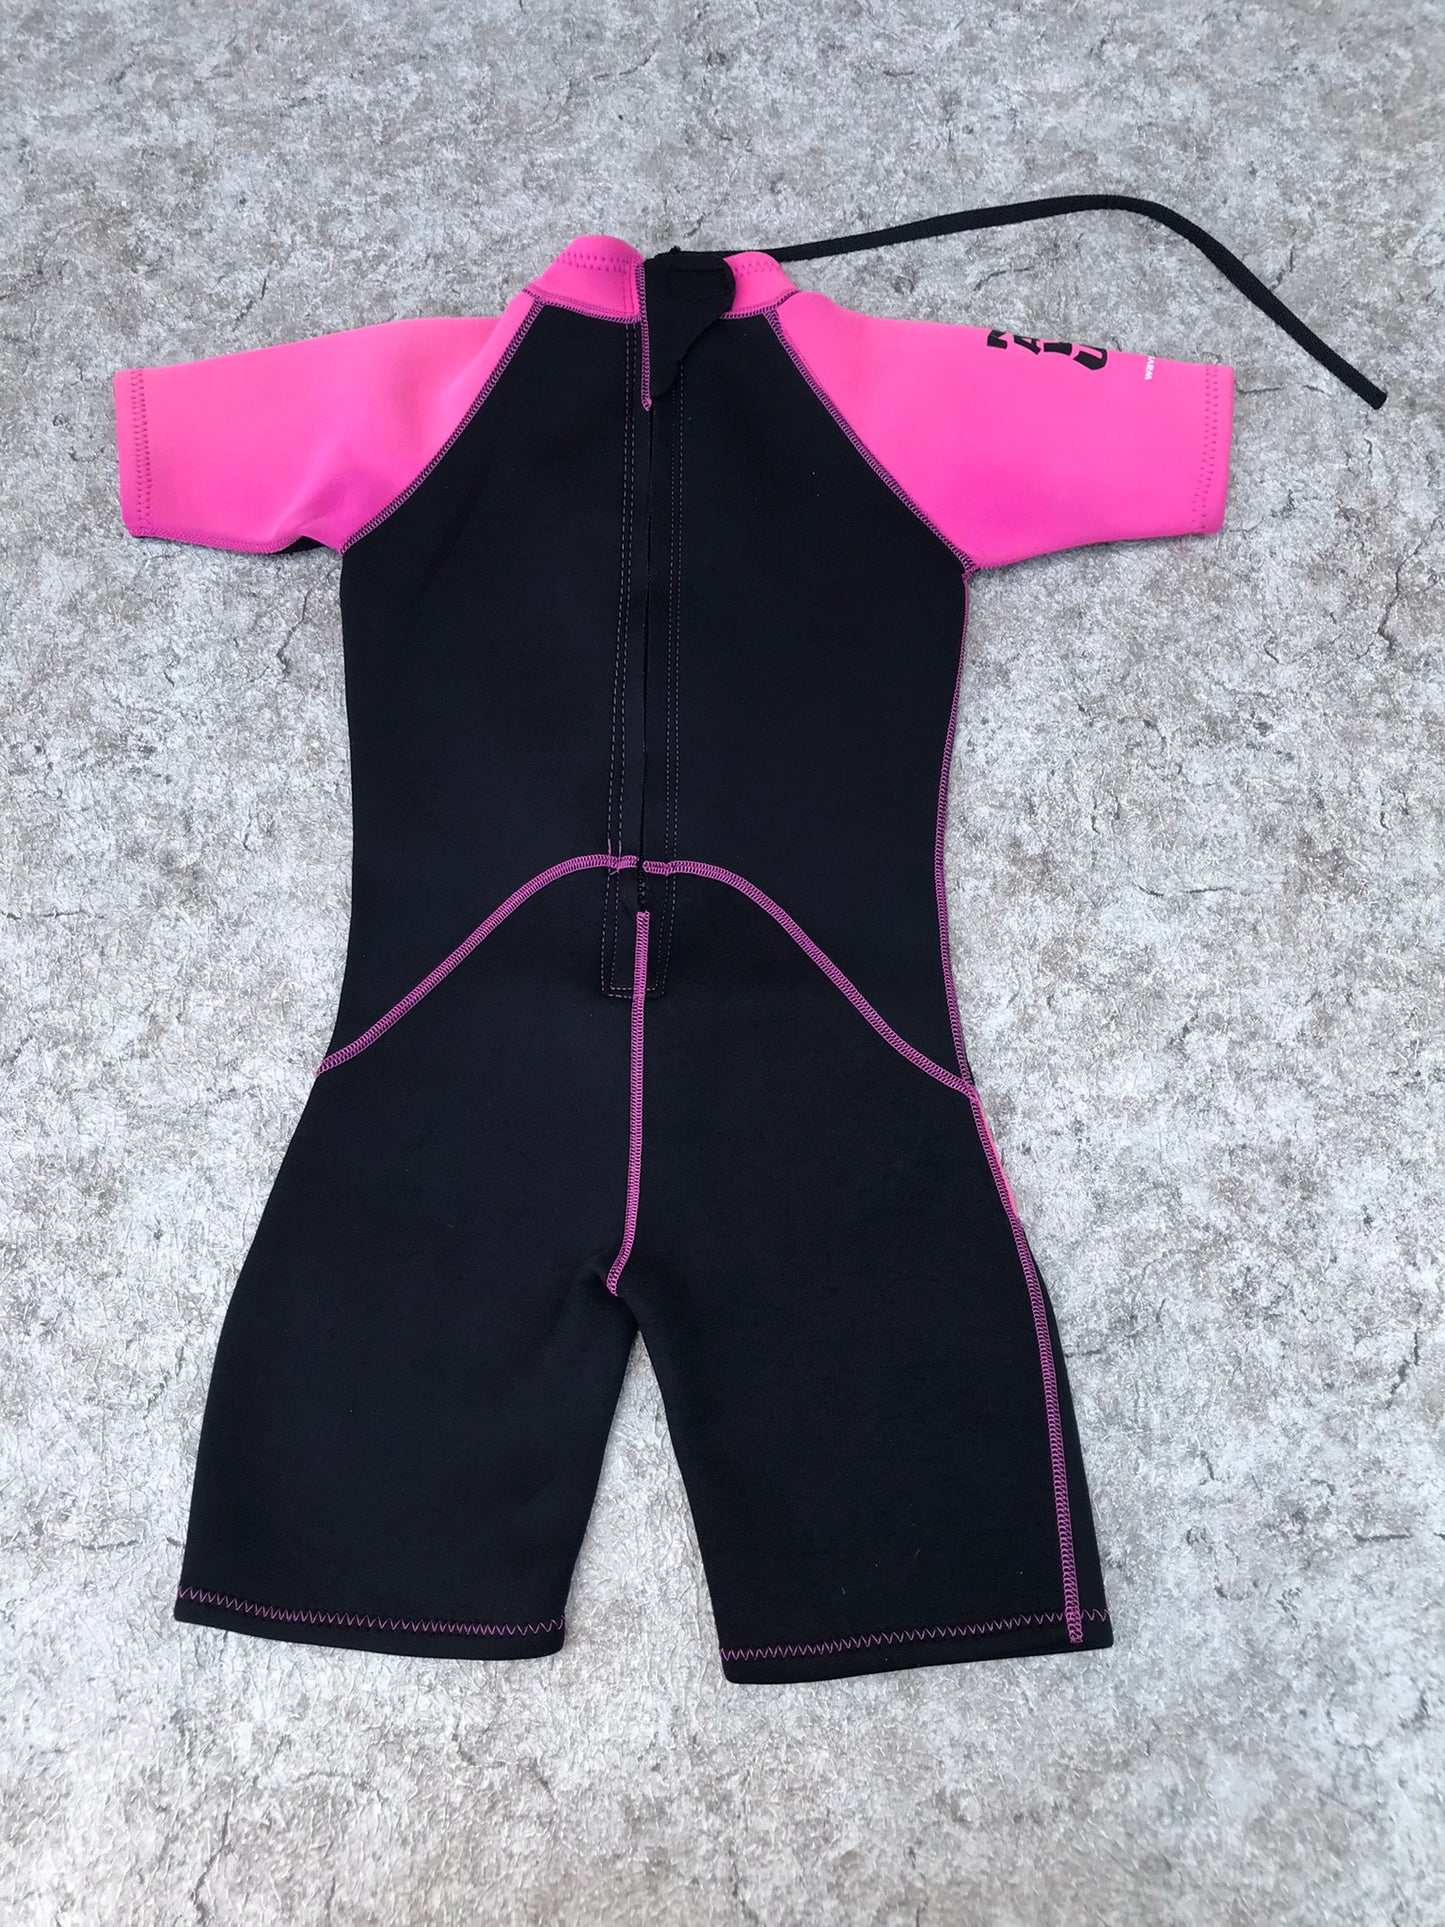 Wetsuit Child Size 10-12 Wavewear Pink Grey 2-3 mm Neoprene Excellent